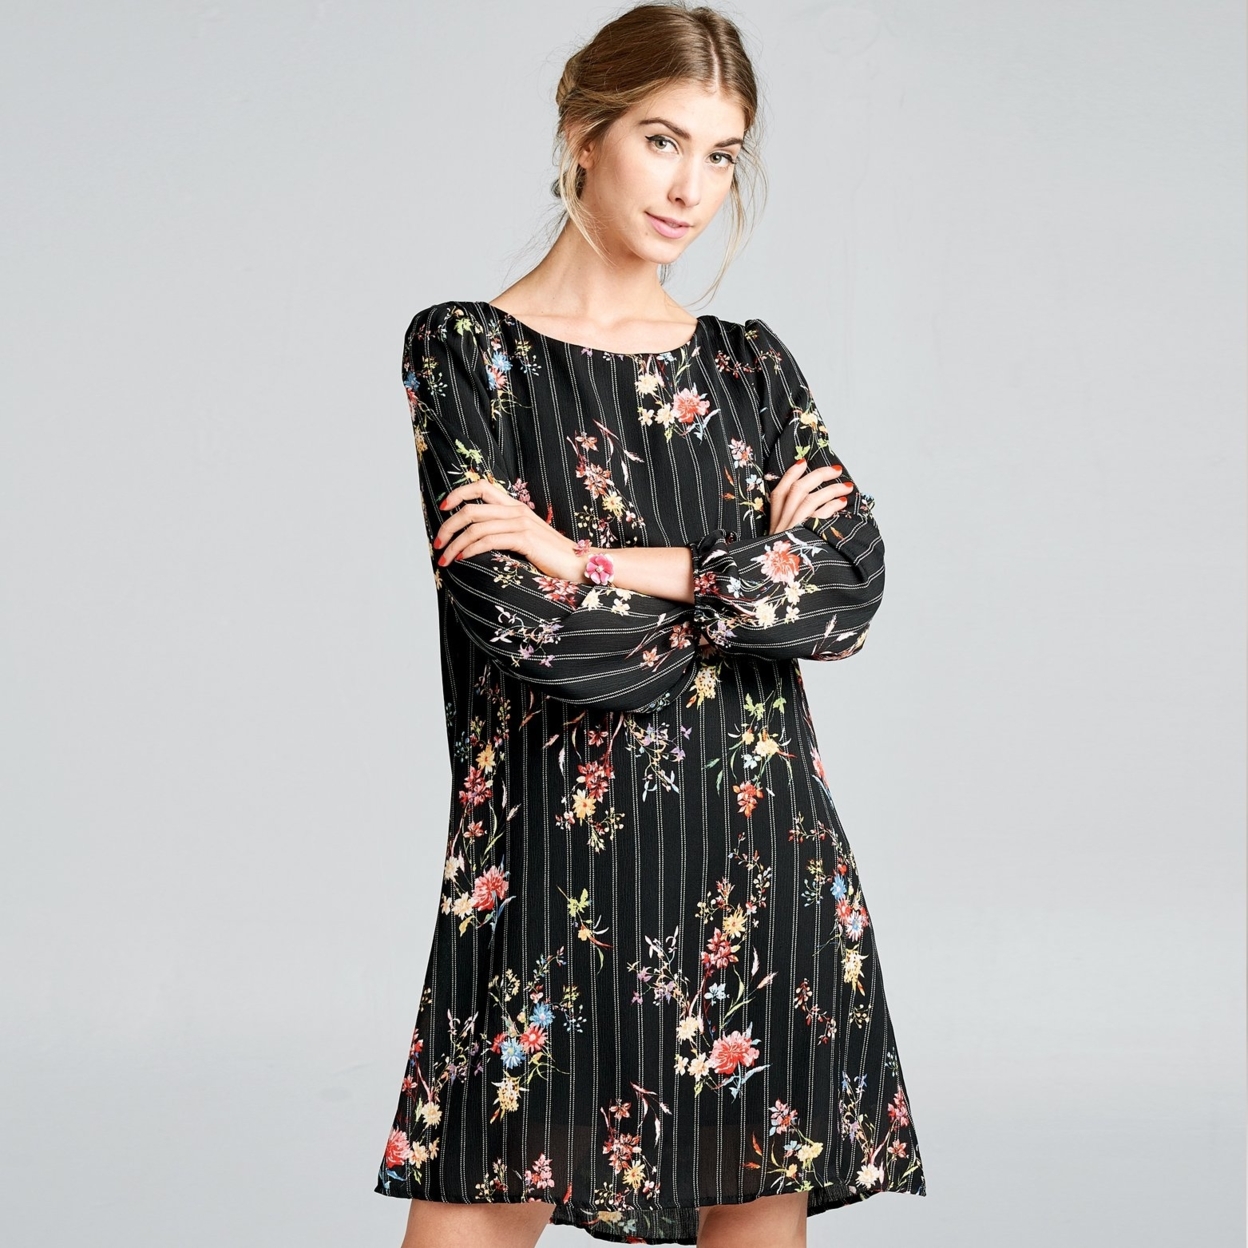 Floral Stripe Shift Dress - Black, Medium (8-10)